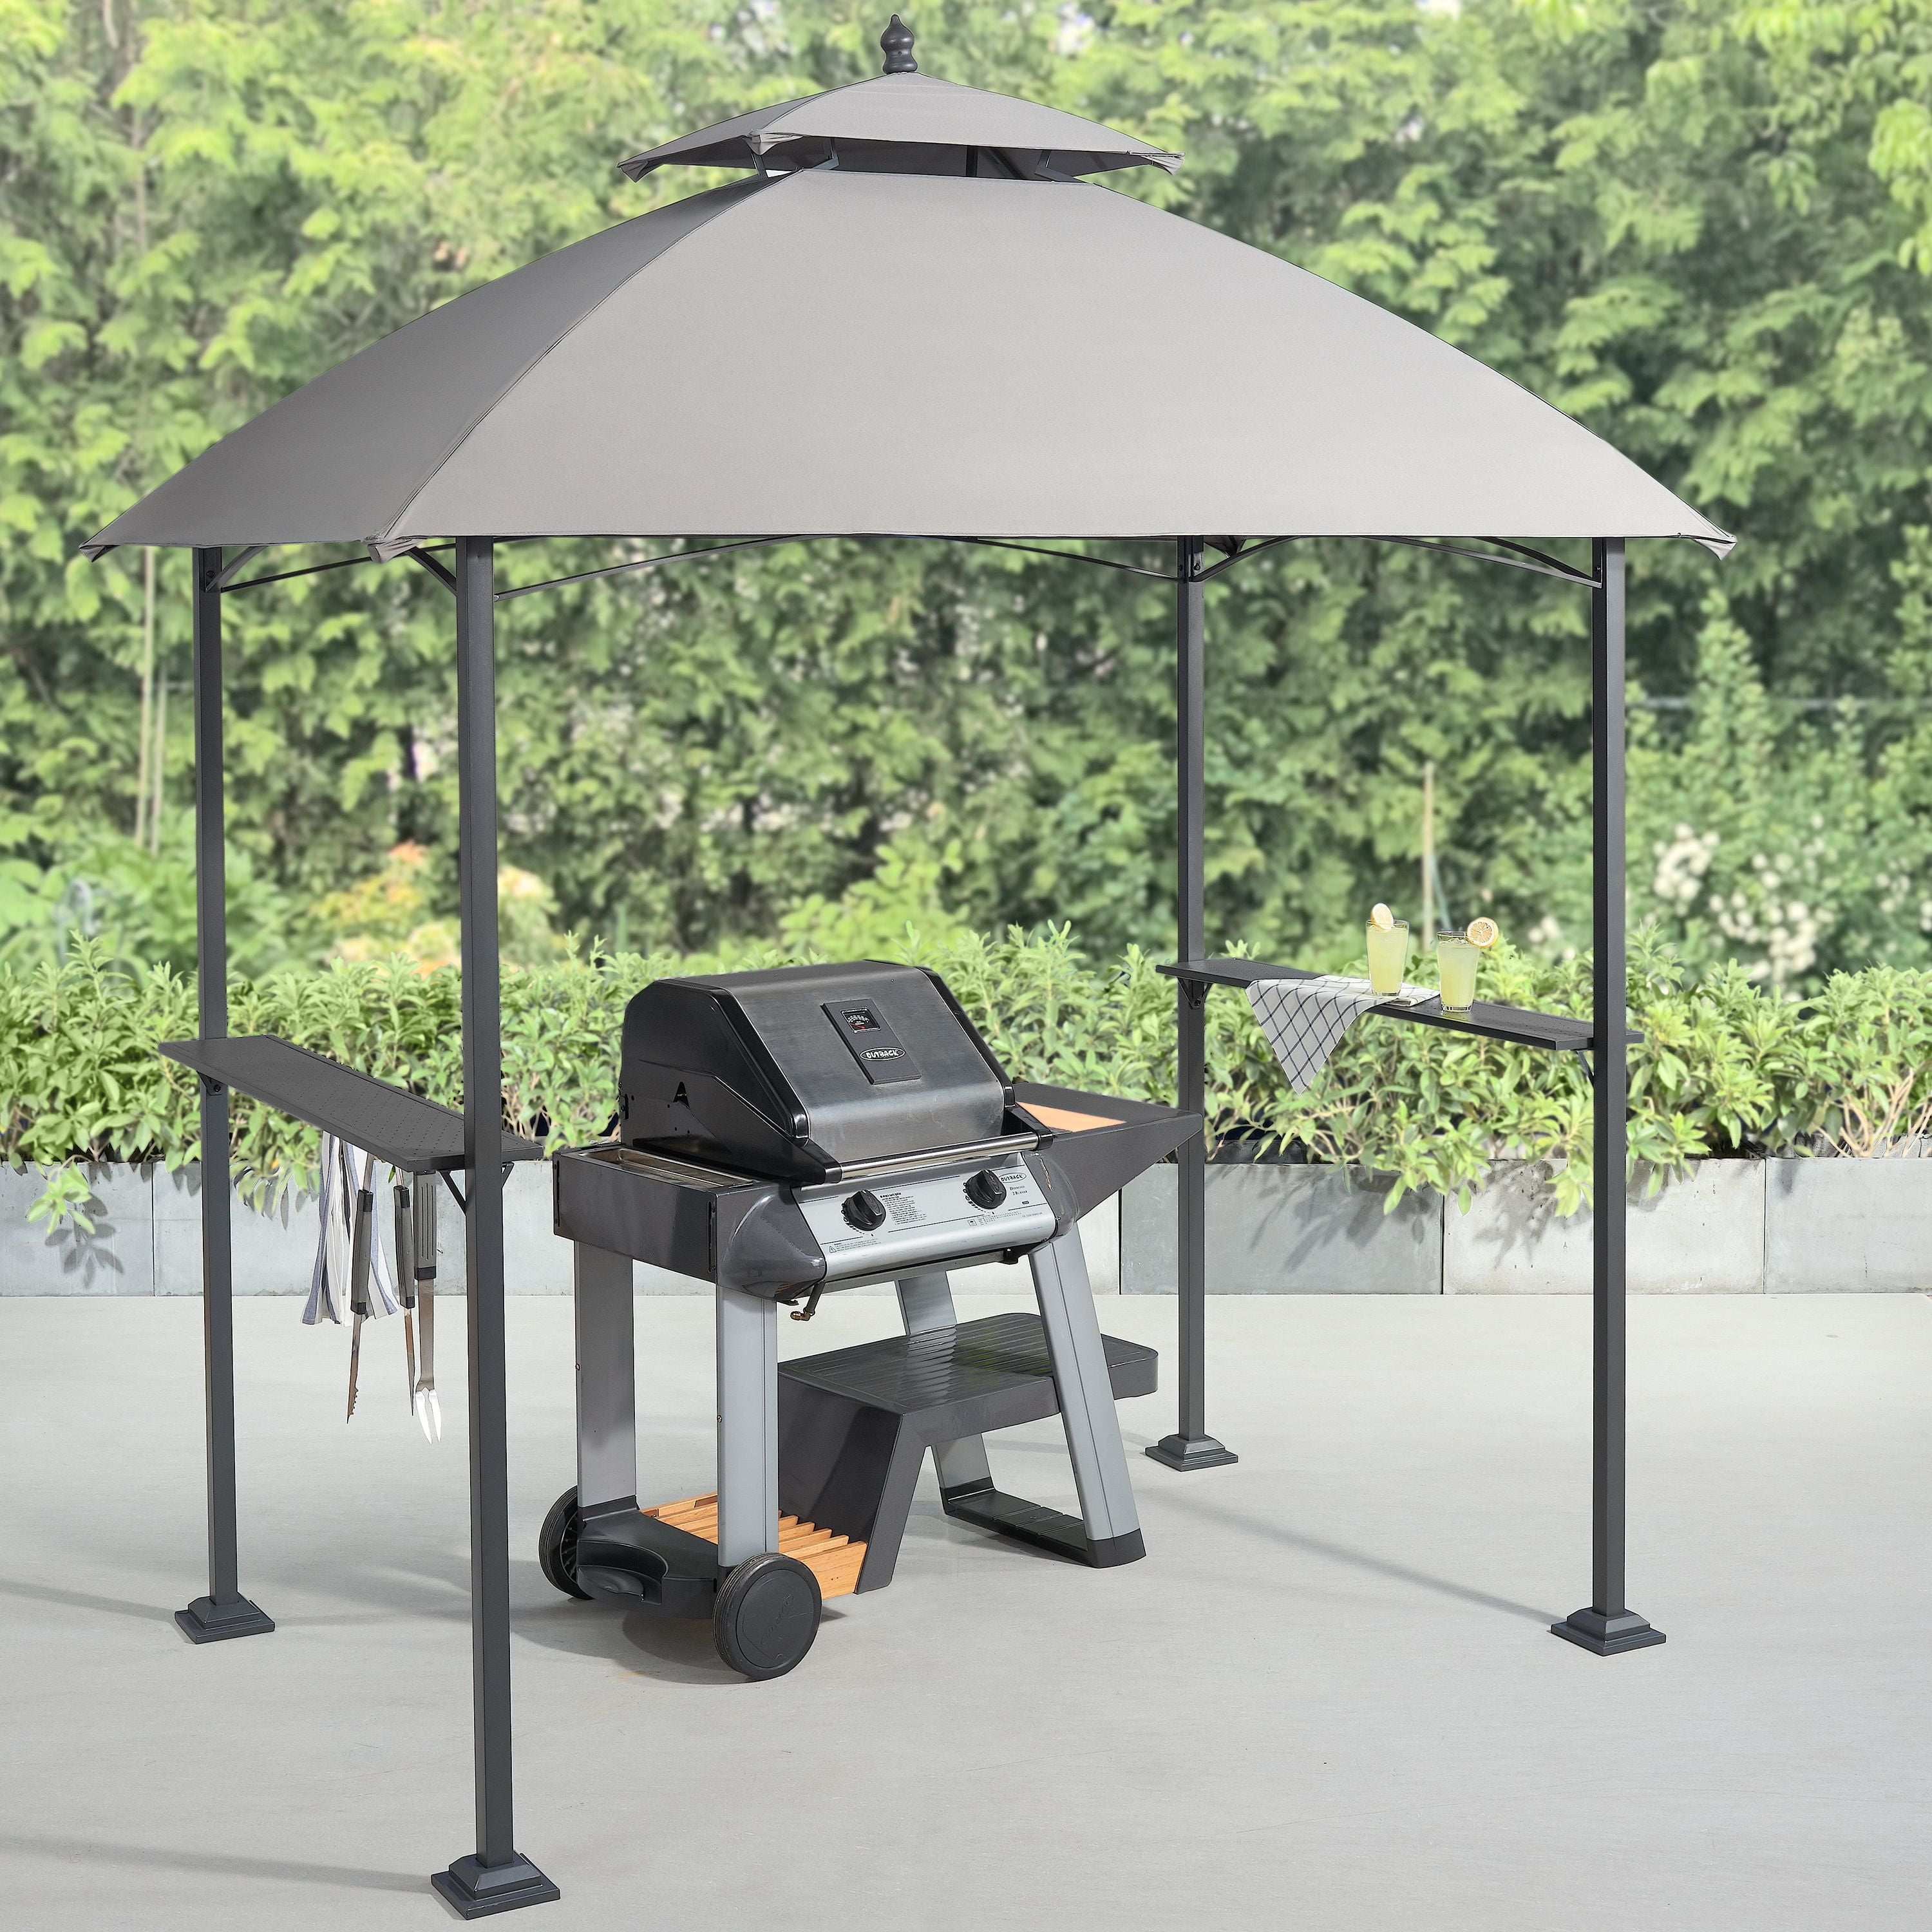 Nogen skrivebord smart Mainstays Ledger 5' x 8' Outdoor Grill Gazebo with Canopy Top - Walmart.com